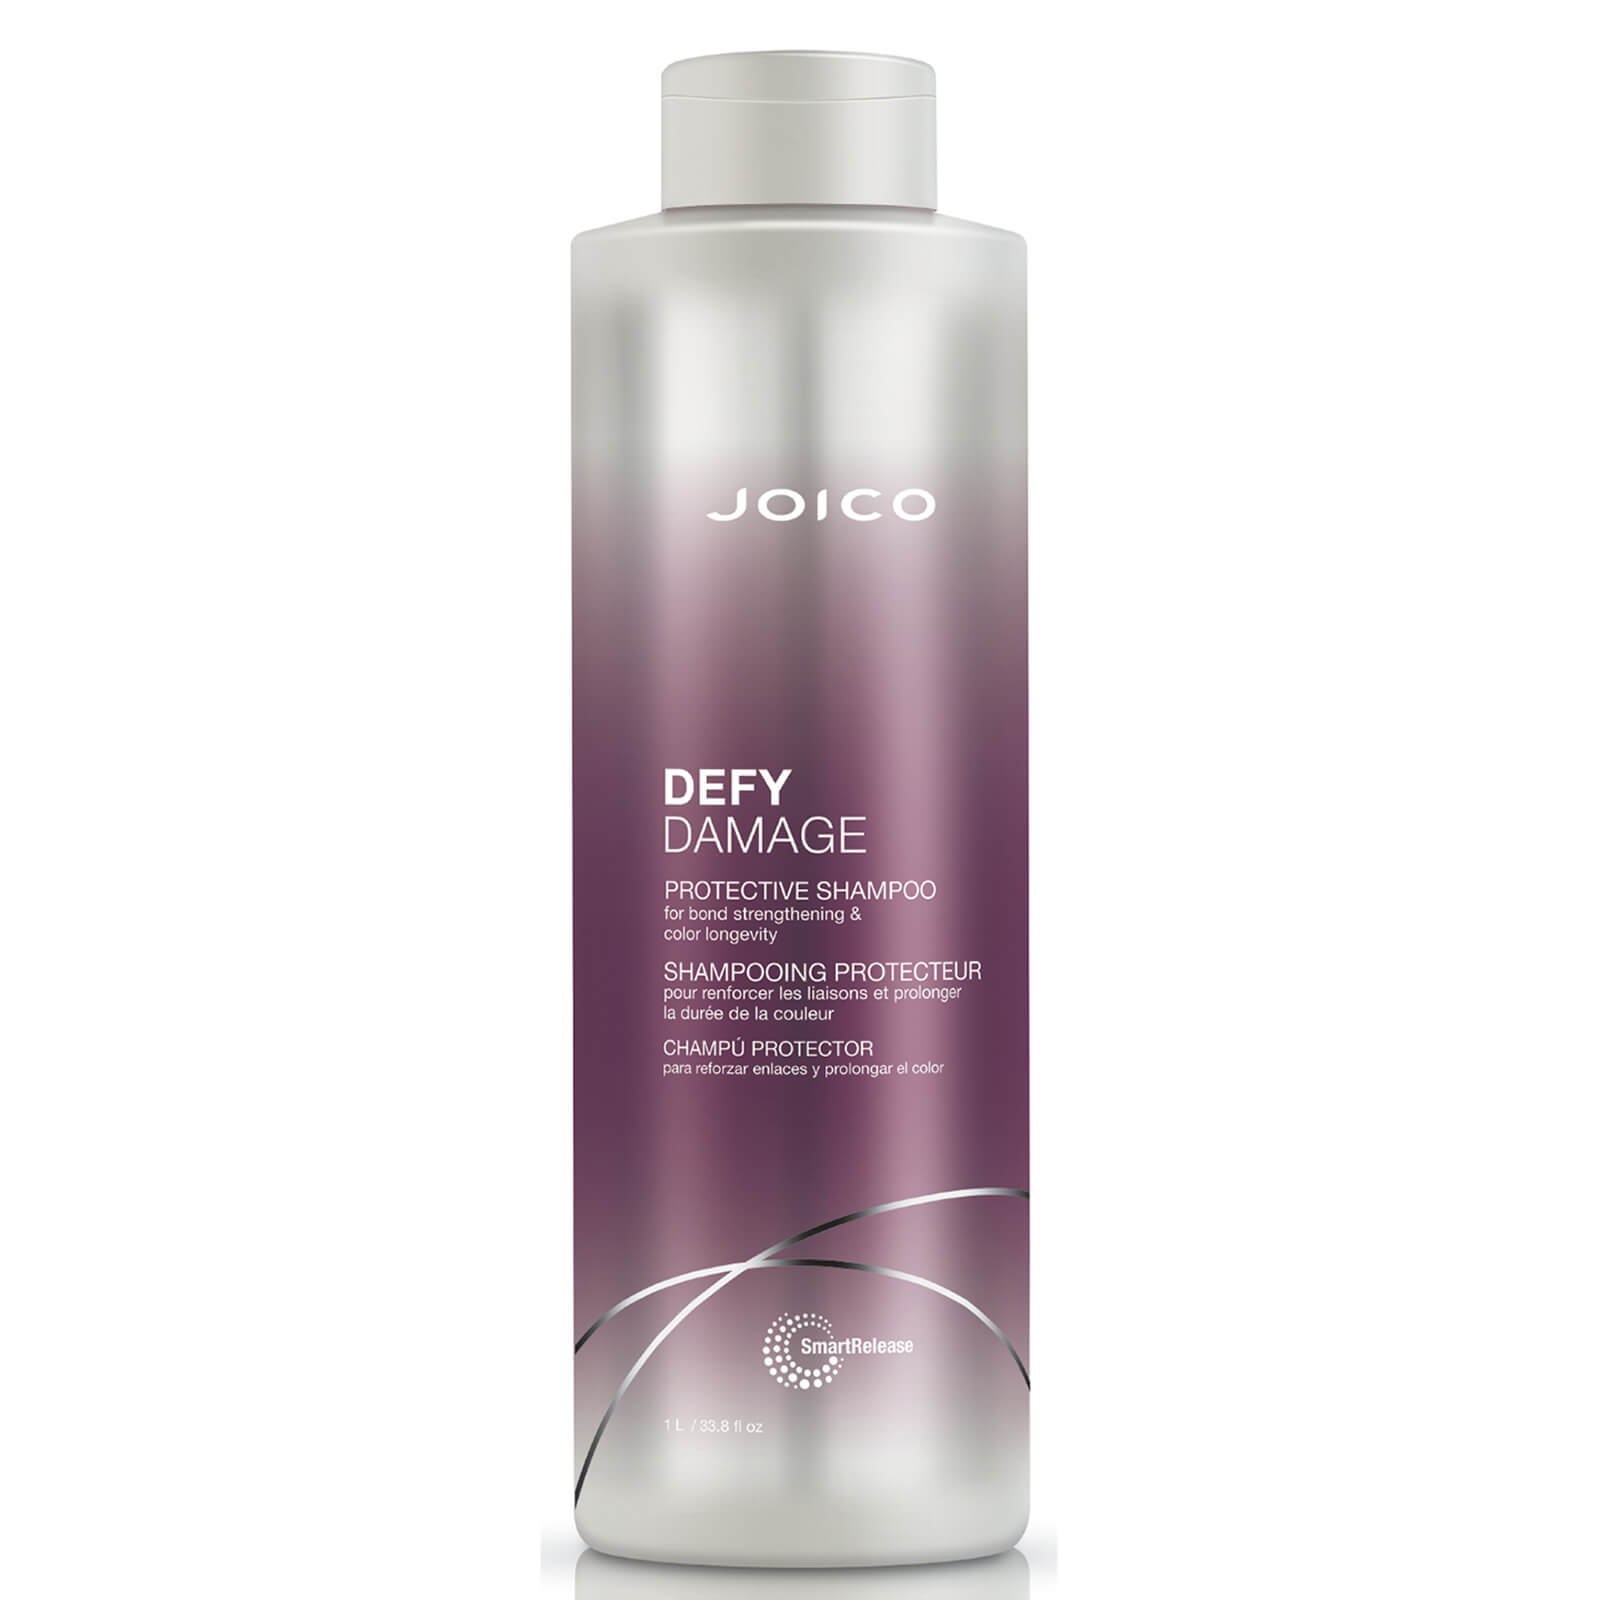 Joico Defy Damage Protective Shampoo 1000ml (Worth PS75.67)